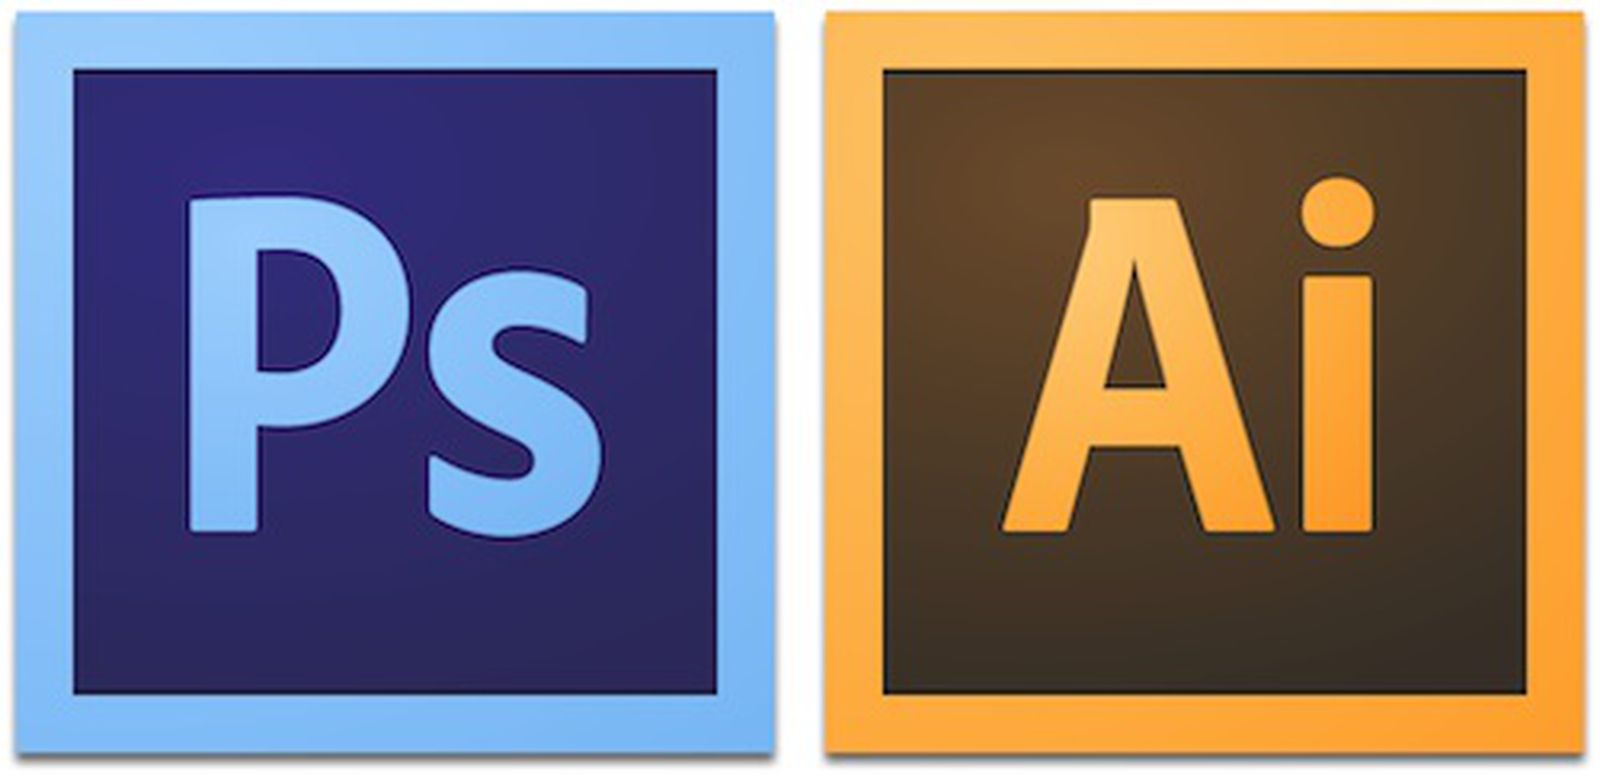 Adobe Updates Photoshop and Illustrator CS6 with Retina Display